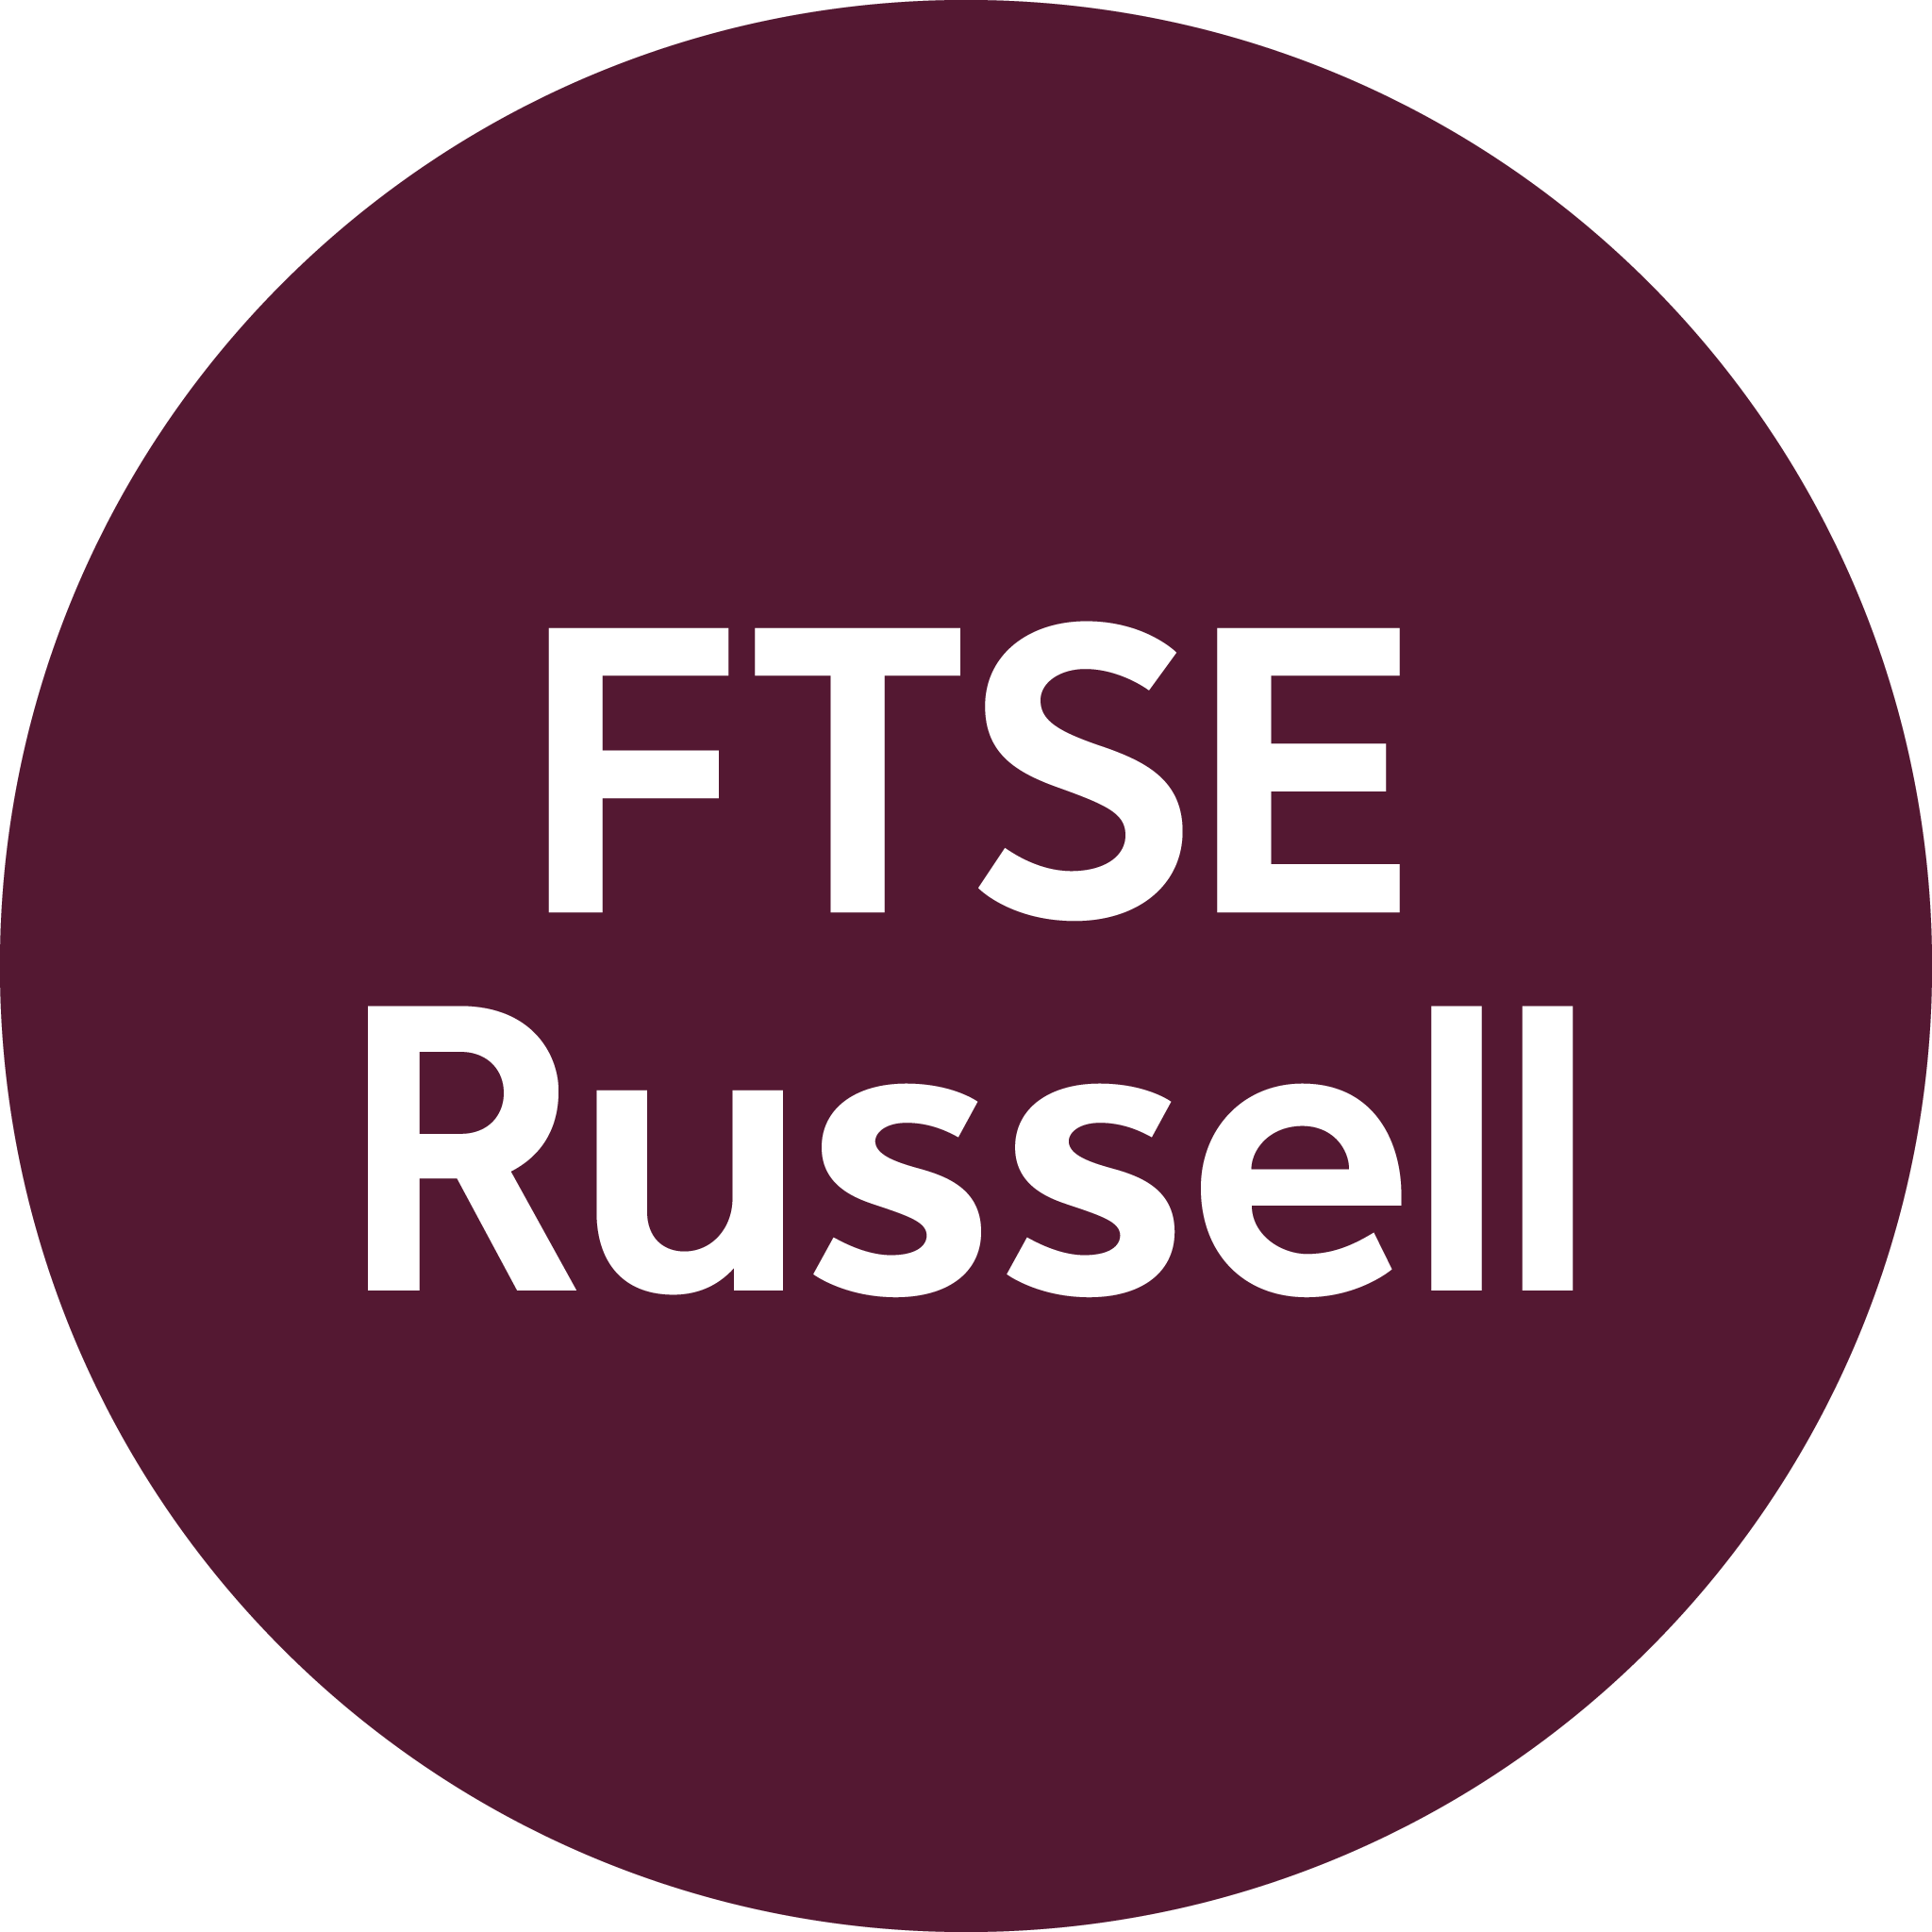 FTSE Russell logo.